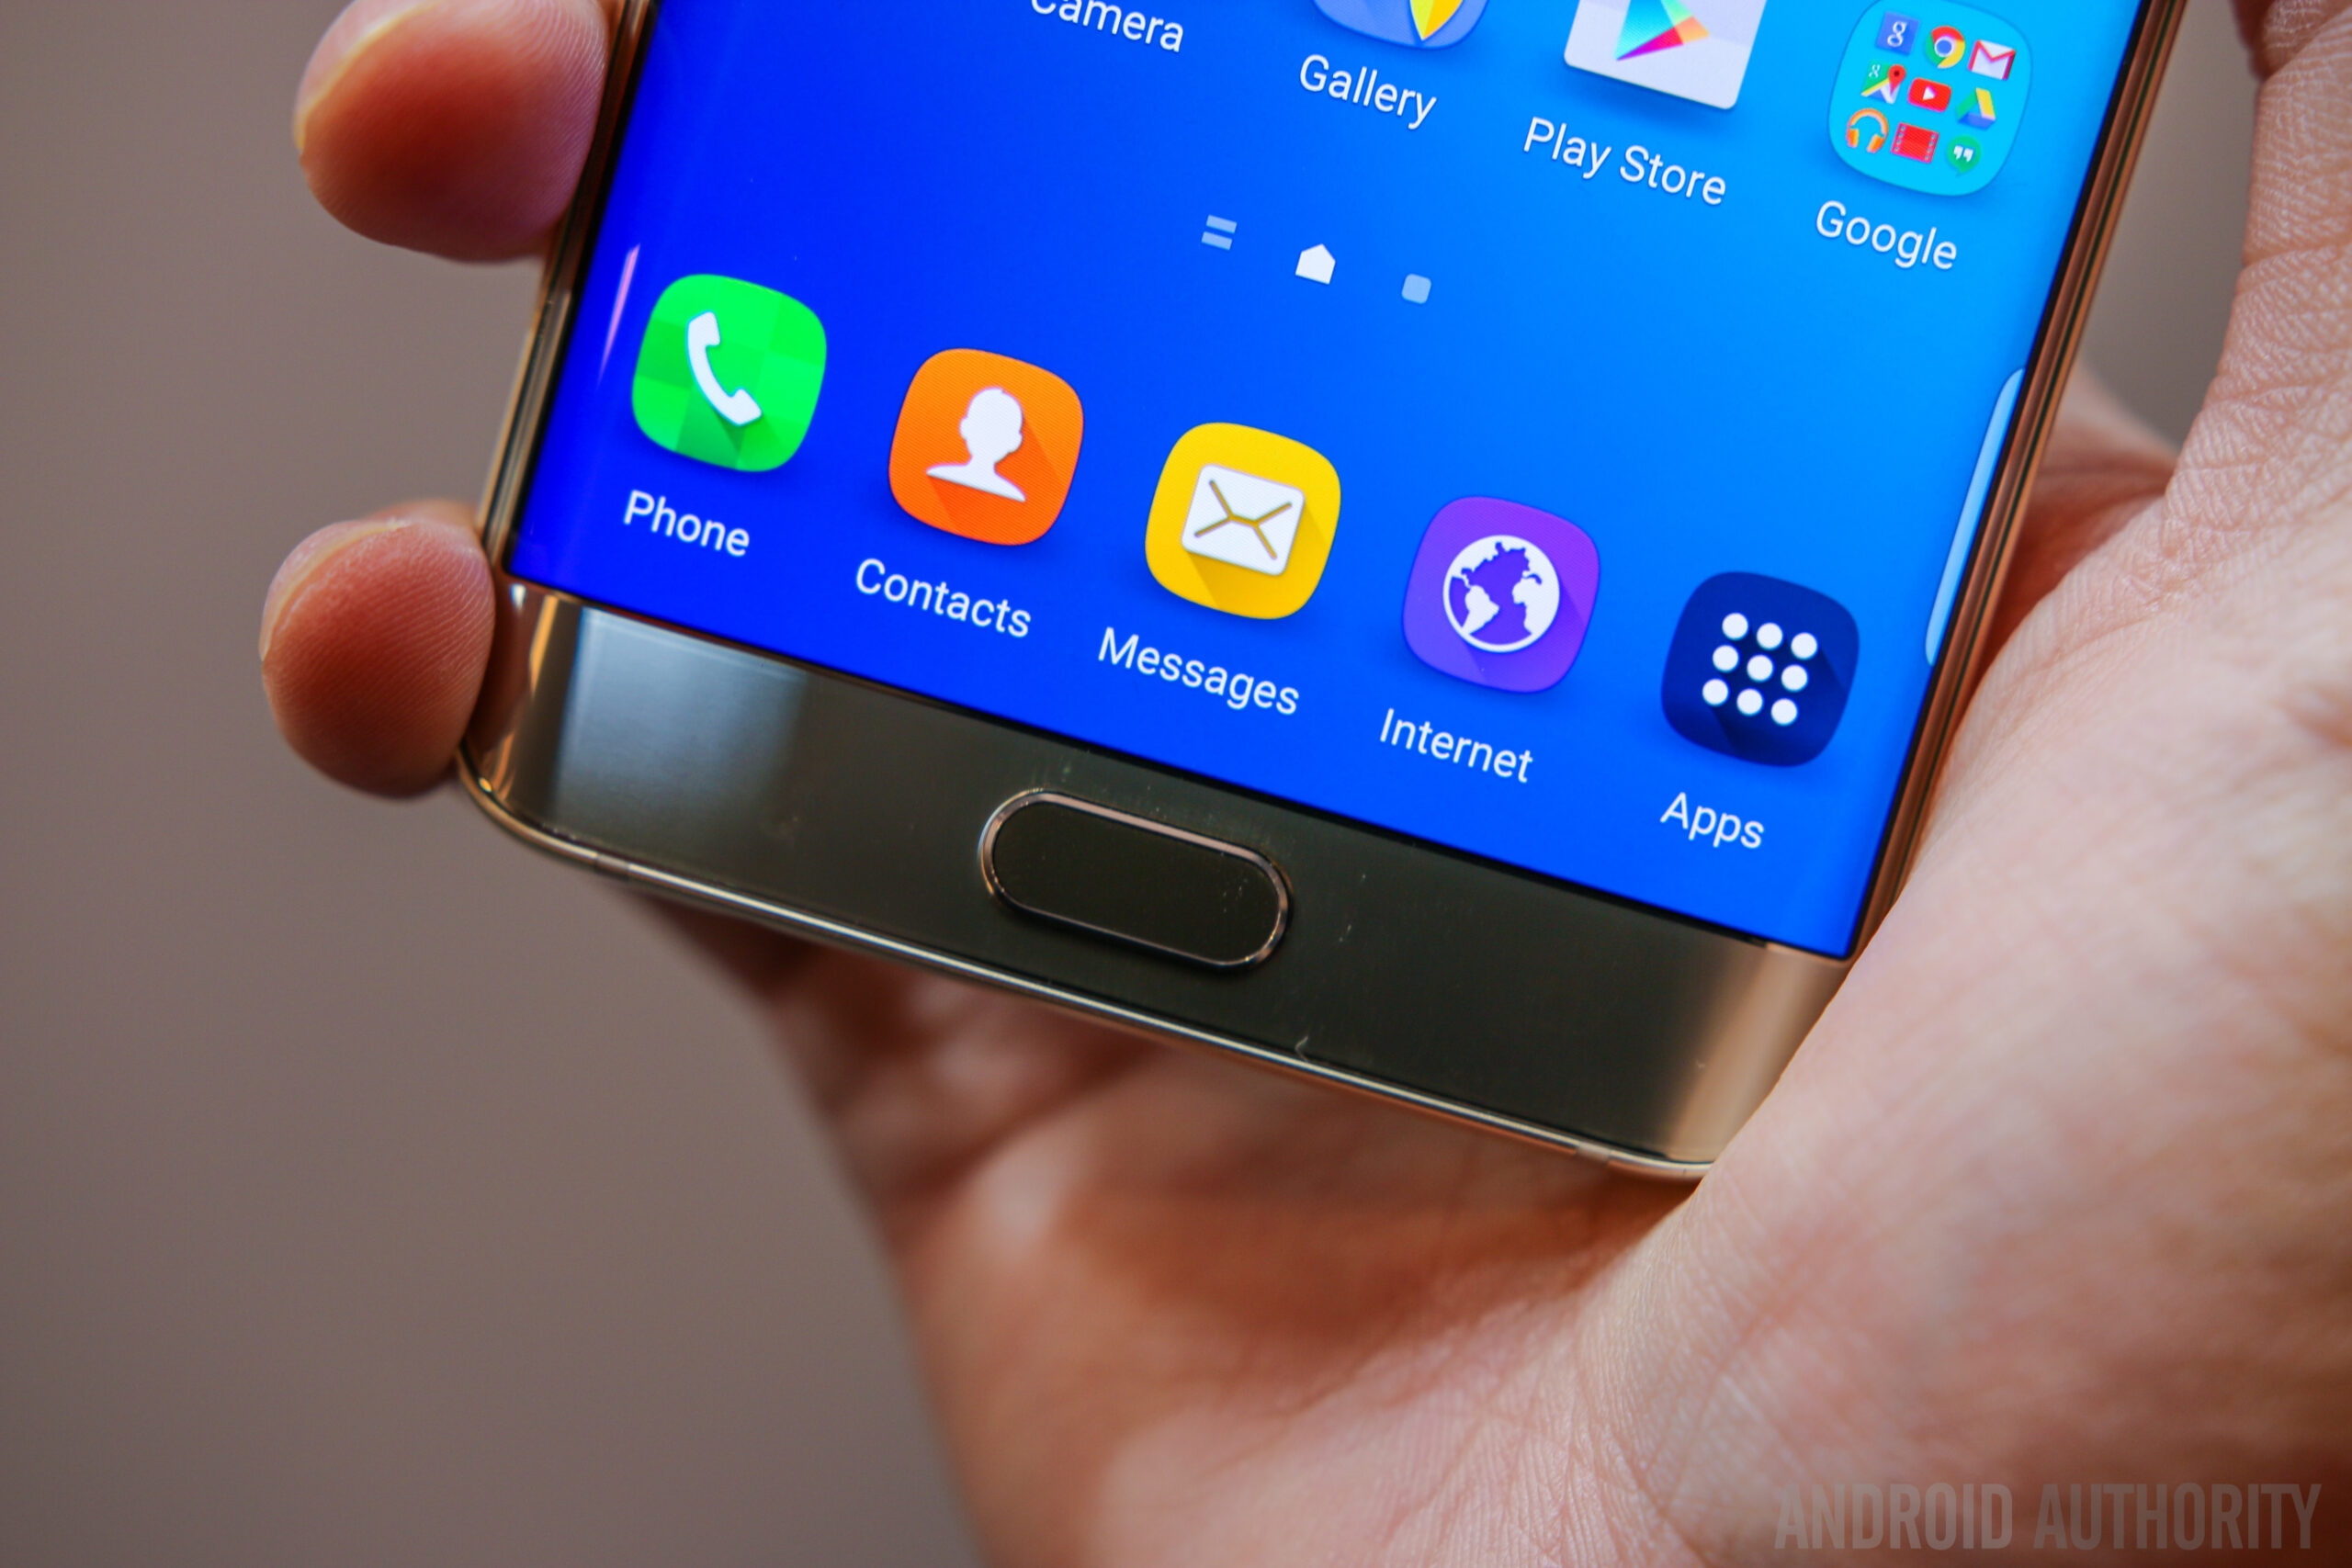 Samsung Galaxy S6 Edge Plus Hands On-12